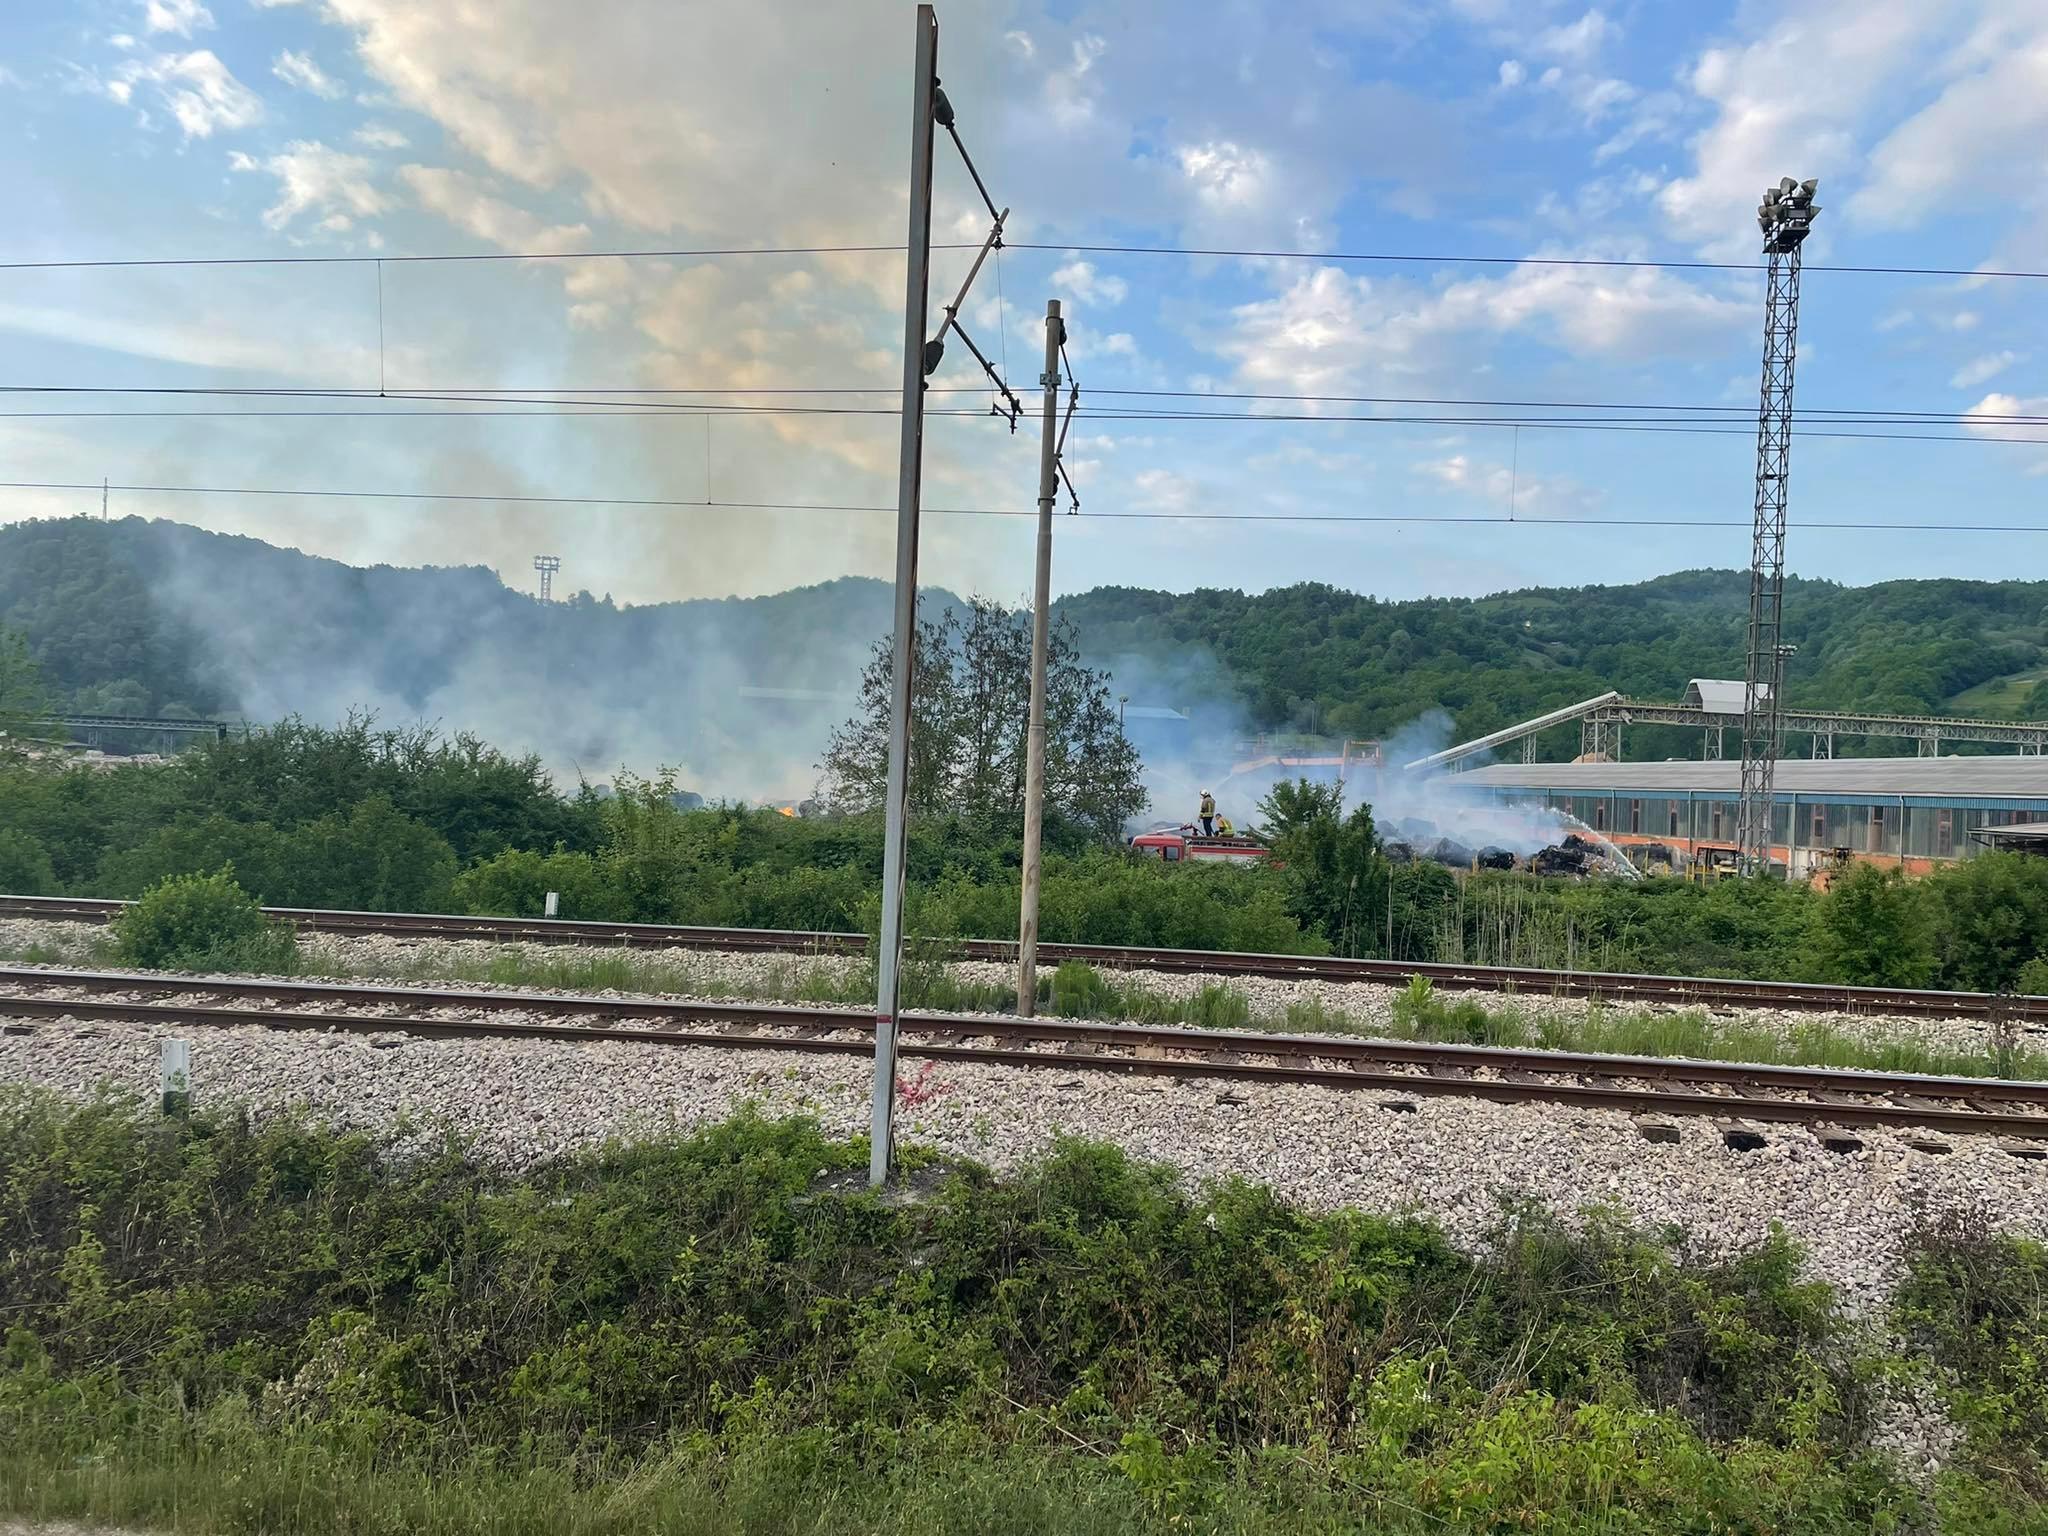 Veliki požar je zahvatio fabriku Natron Hayat u Maglaju - Avaz